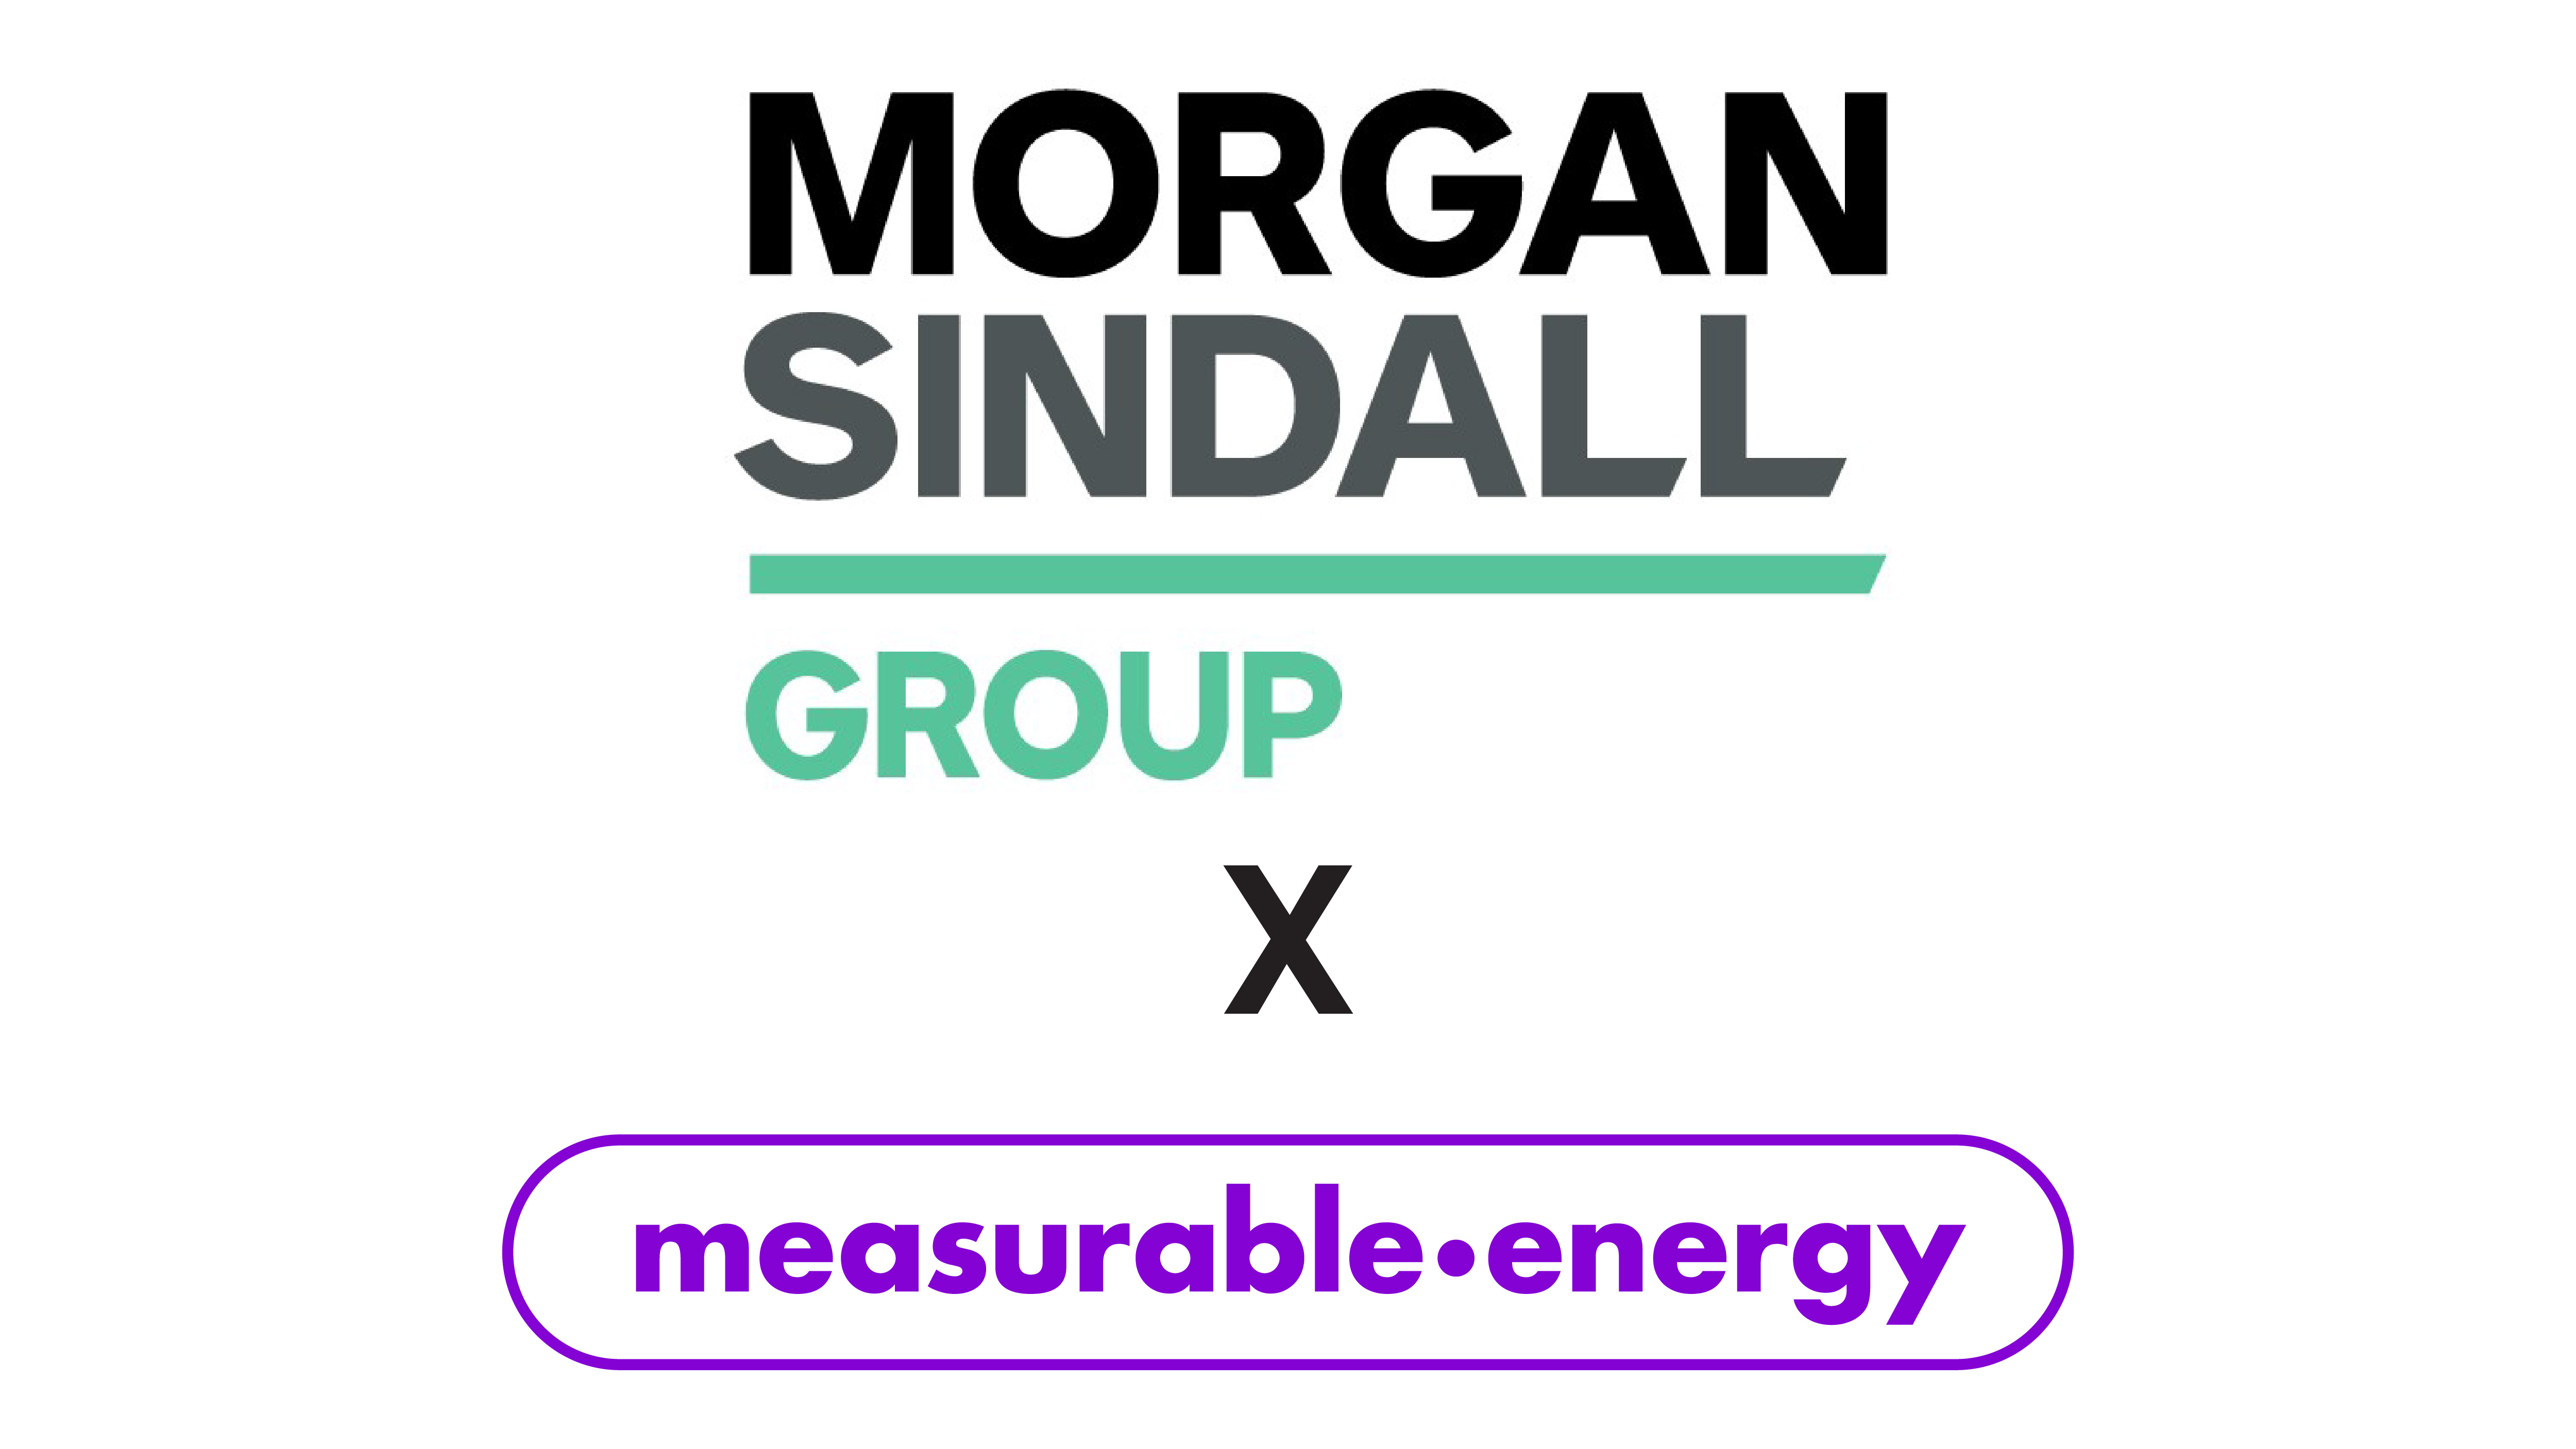 Morgan Sindall Group logo and measurable.energy logo.